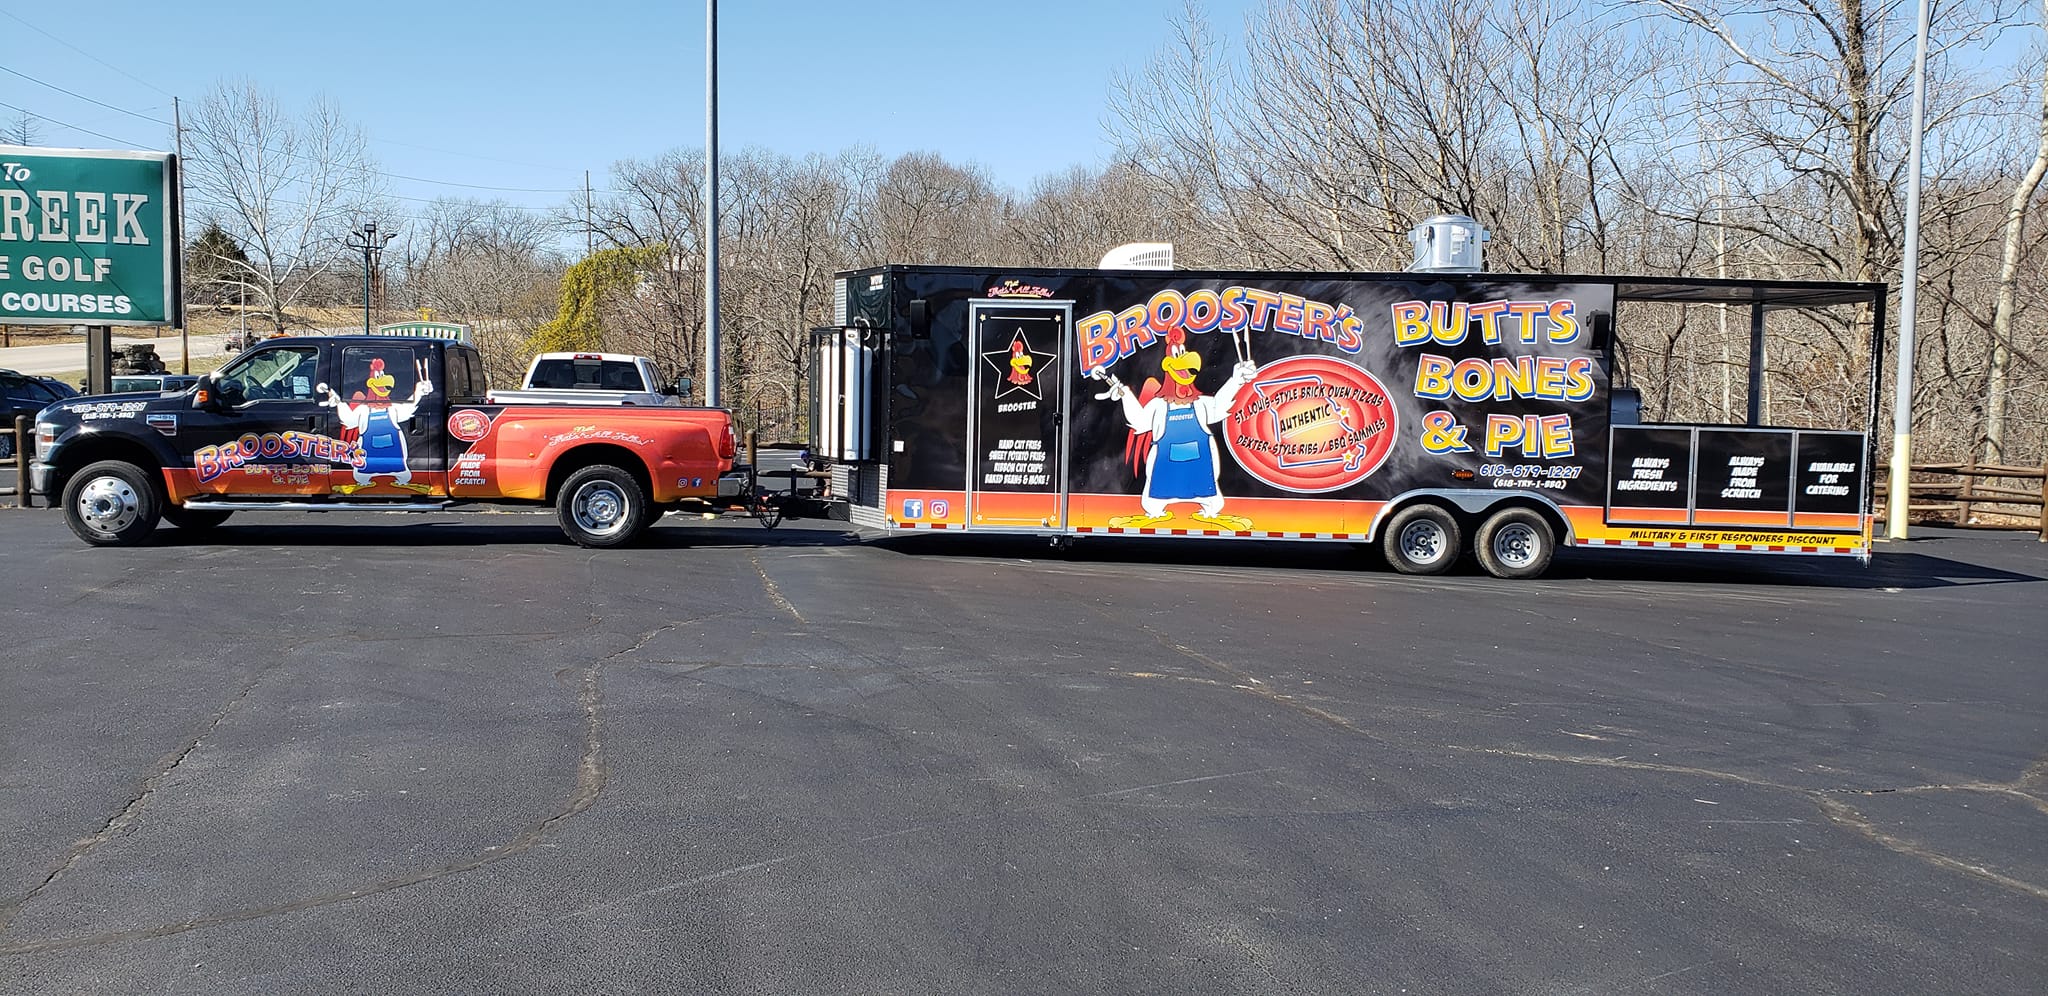 Broosters Butts Bones And Pie Food Truck Trailer Vehicle Vinyl Wrap Pro Dezigns Designs Visual Branding Columbia Missouri